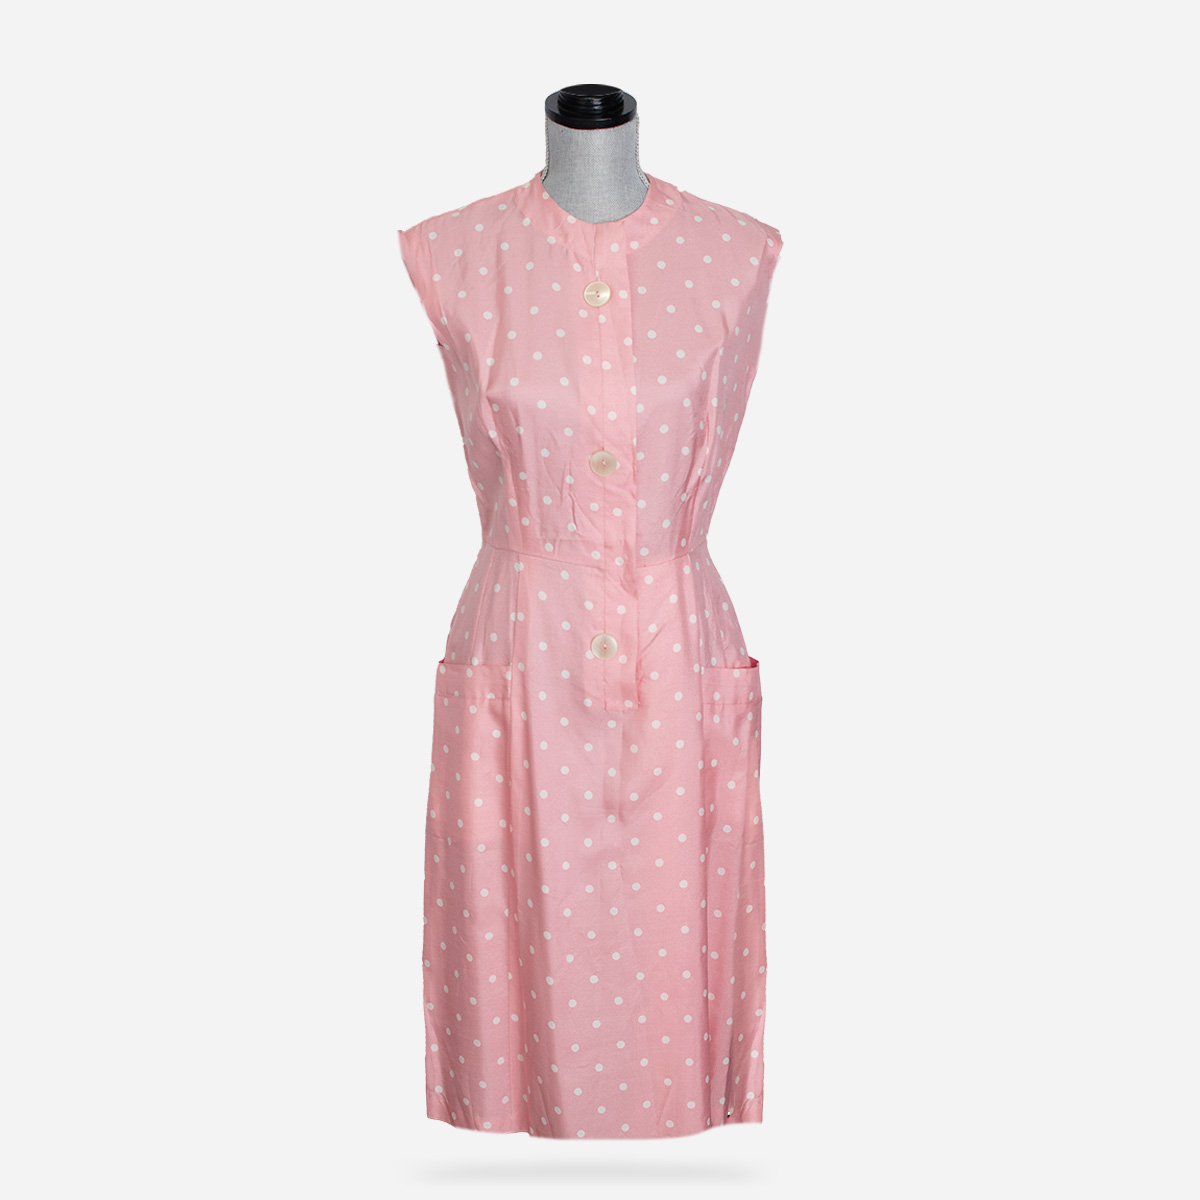 vintage 1950s pink polka dot sleeveless dress with pockets